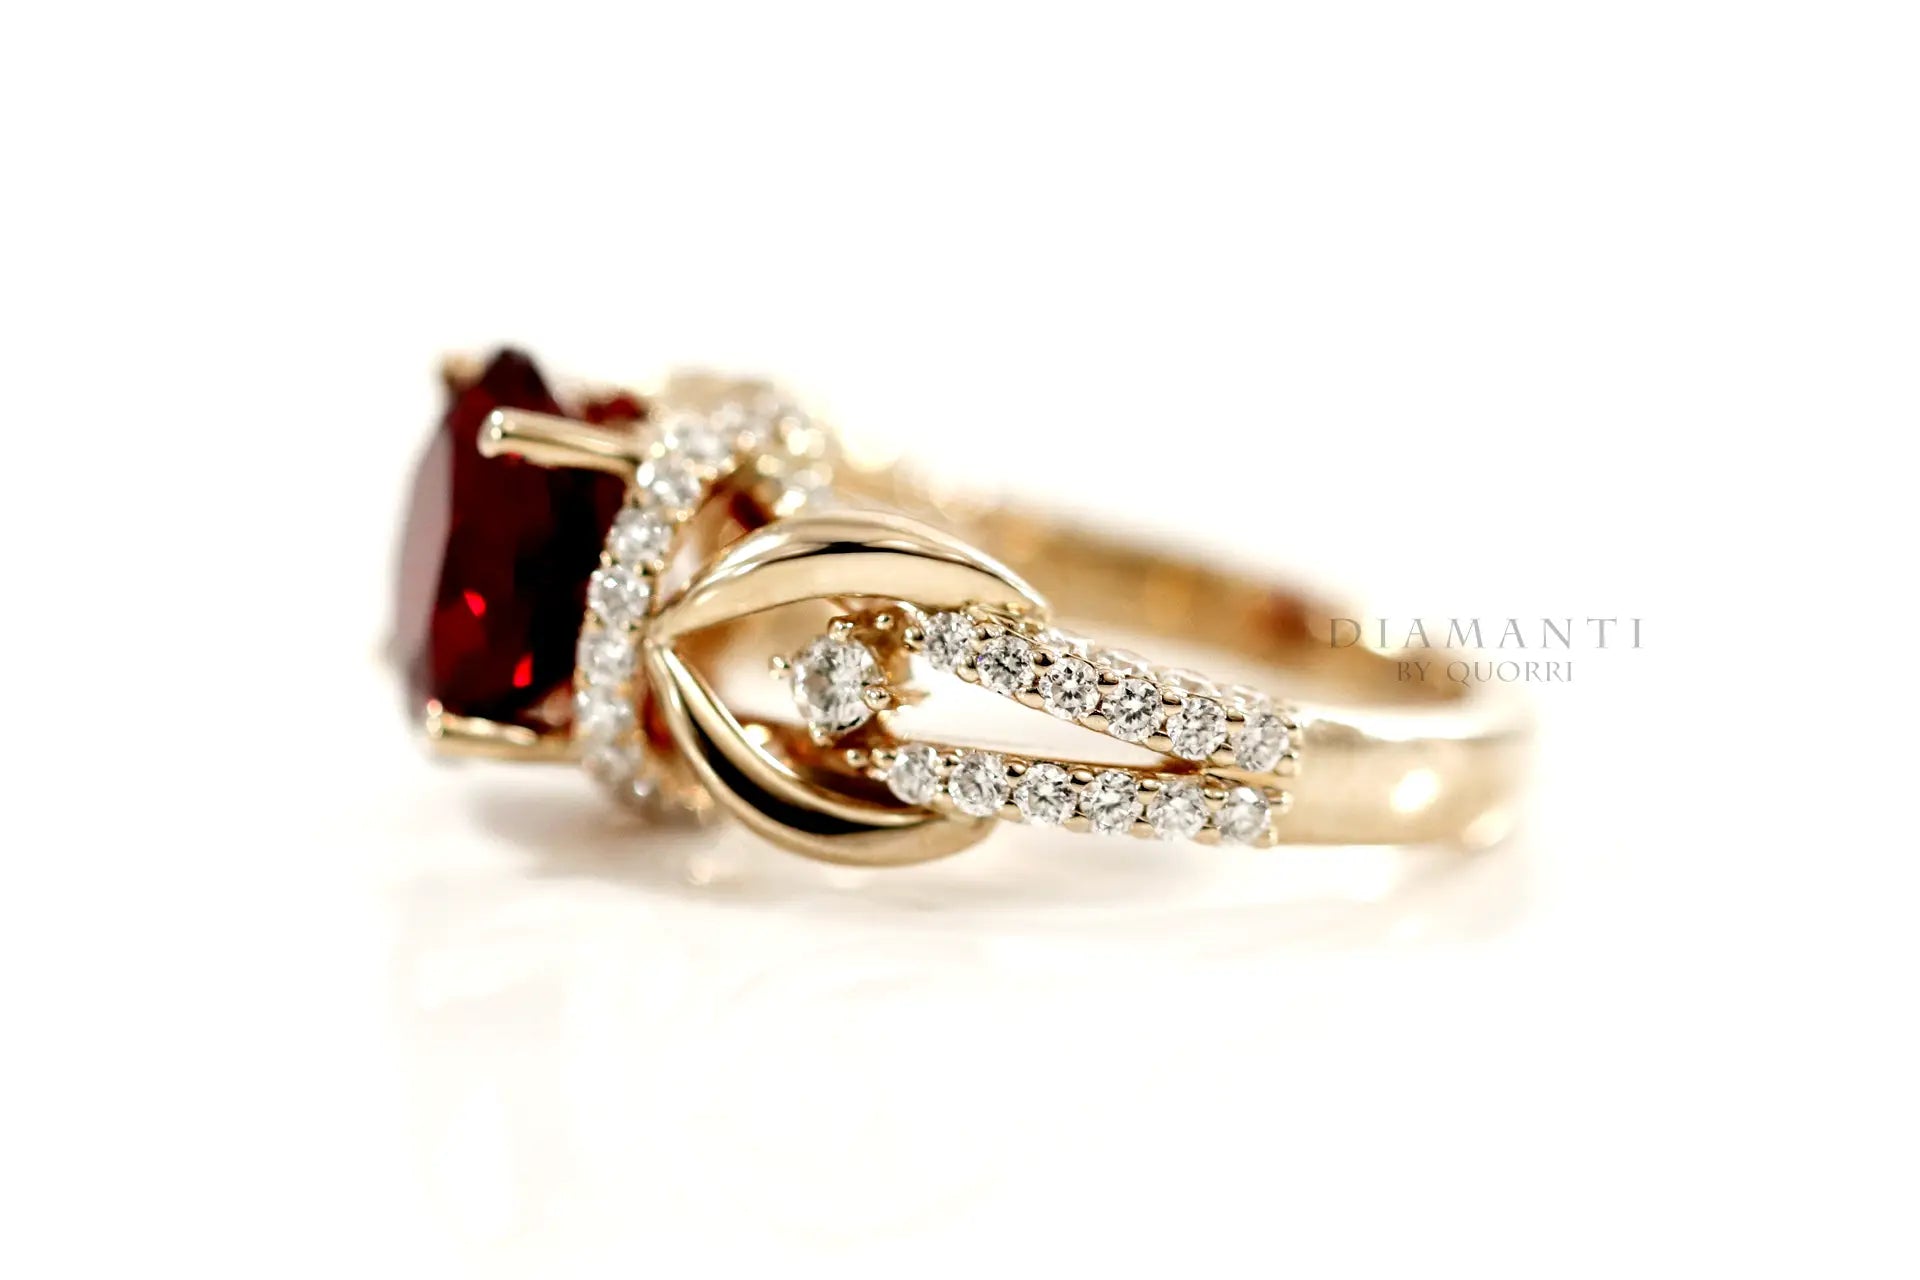 designer 18k yellow gold vintage 3 carat ruby gemstone diamond accented engagement ring Quorri